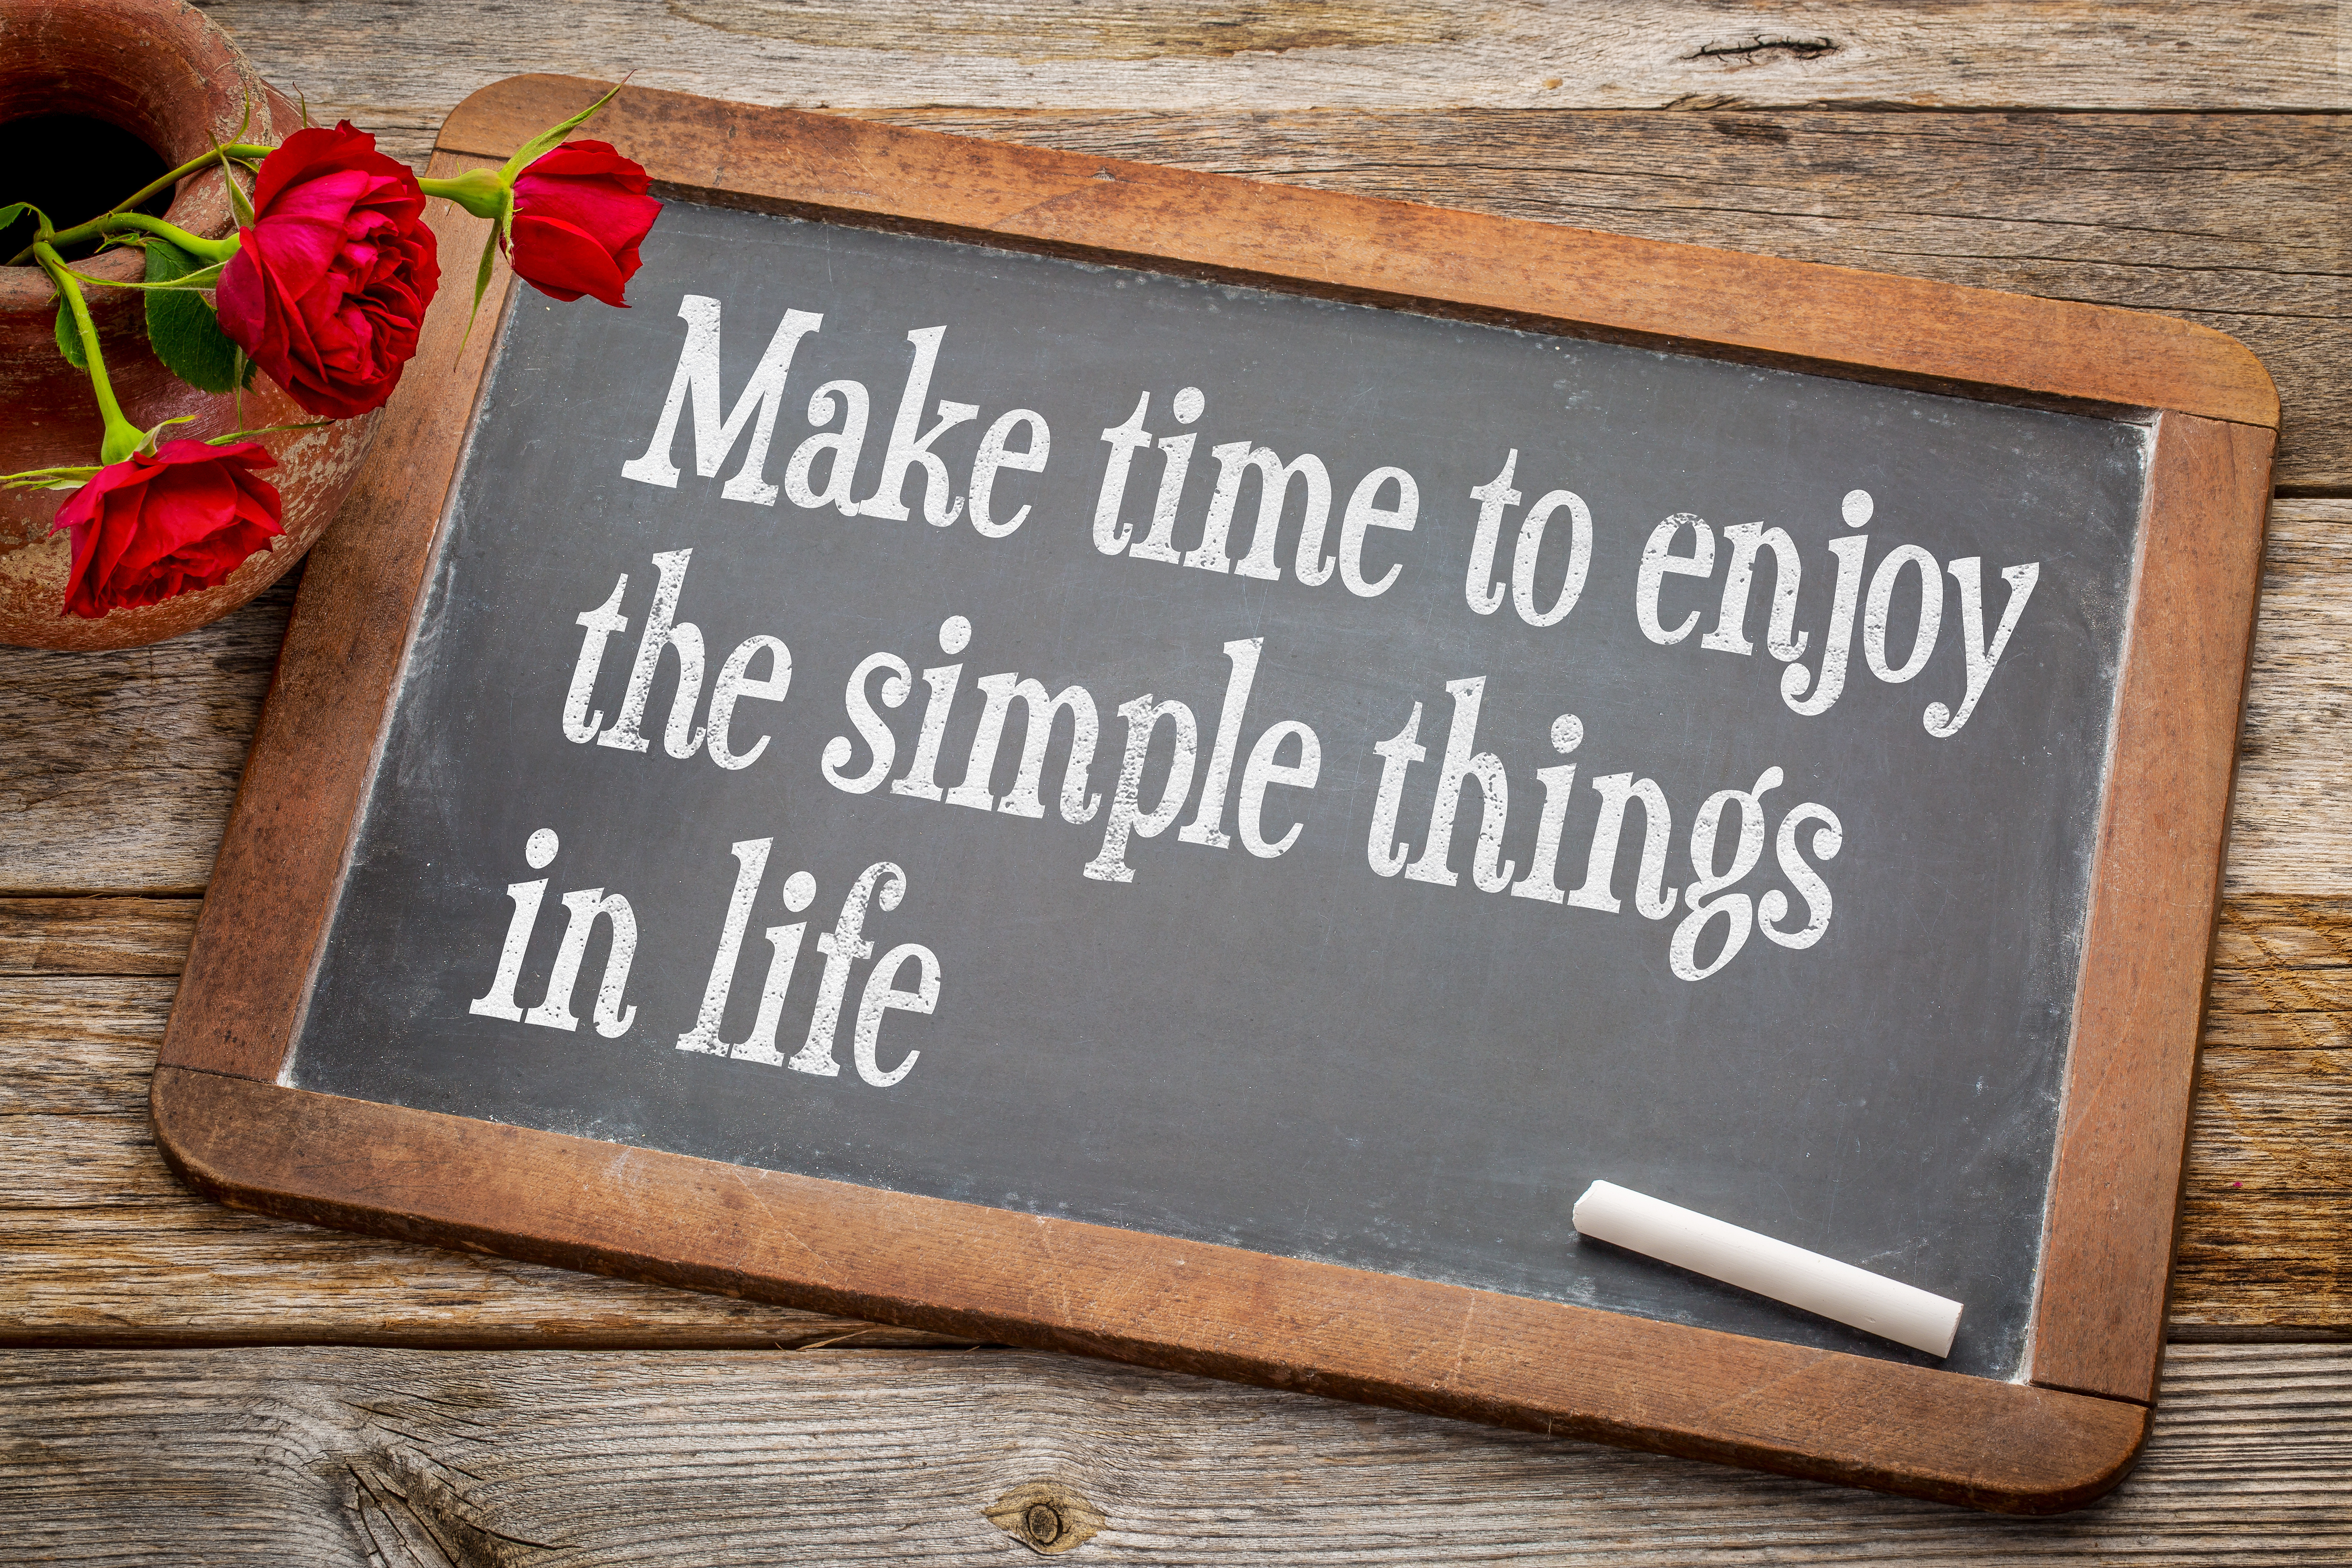 Make time to enjoy simple things